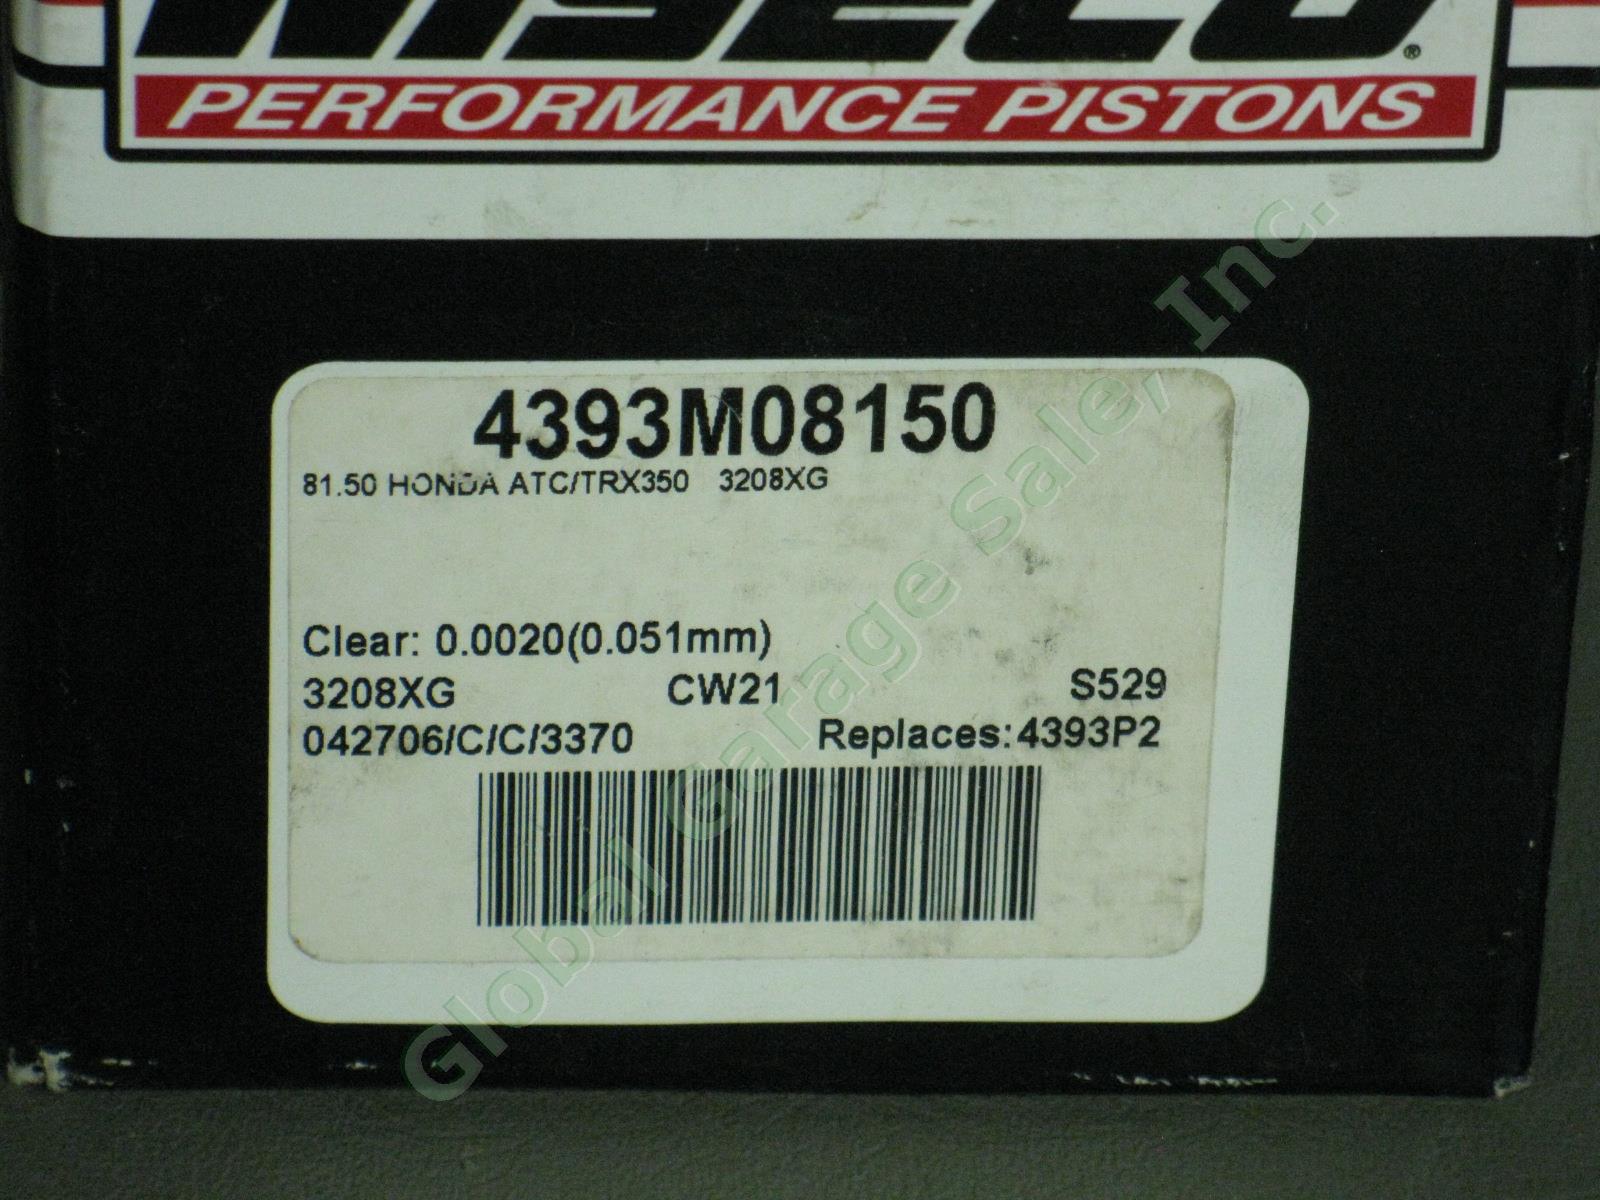 13 NOS Vtg Harley Davidson Motorcycle Piston Kits Parts Lot Wiseco 4012P3 4012P8 6